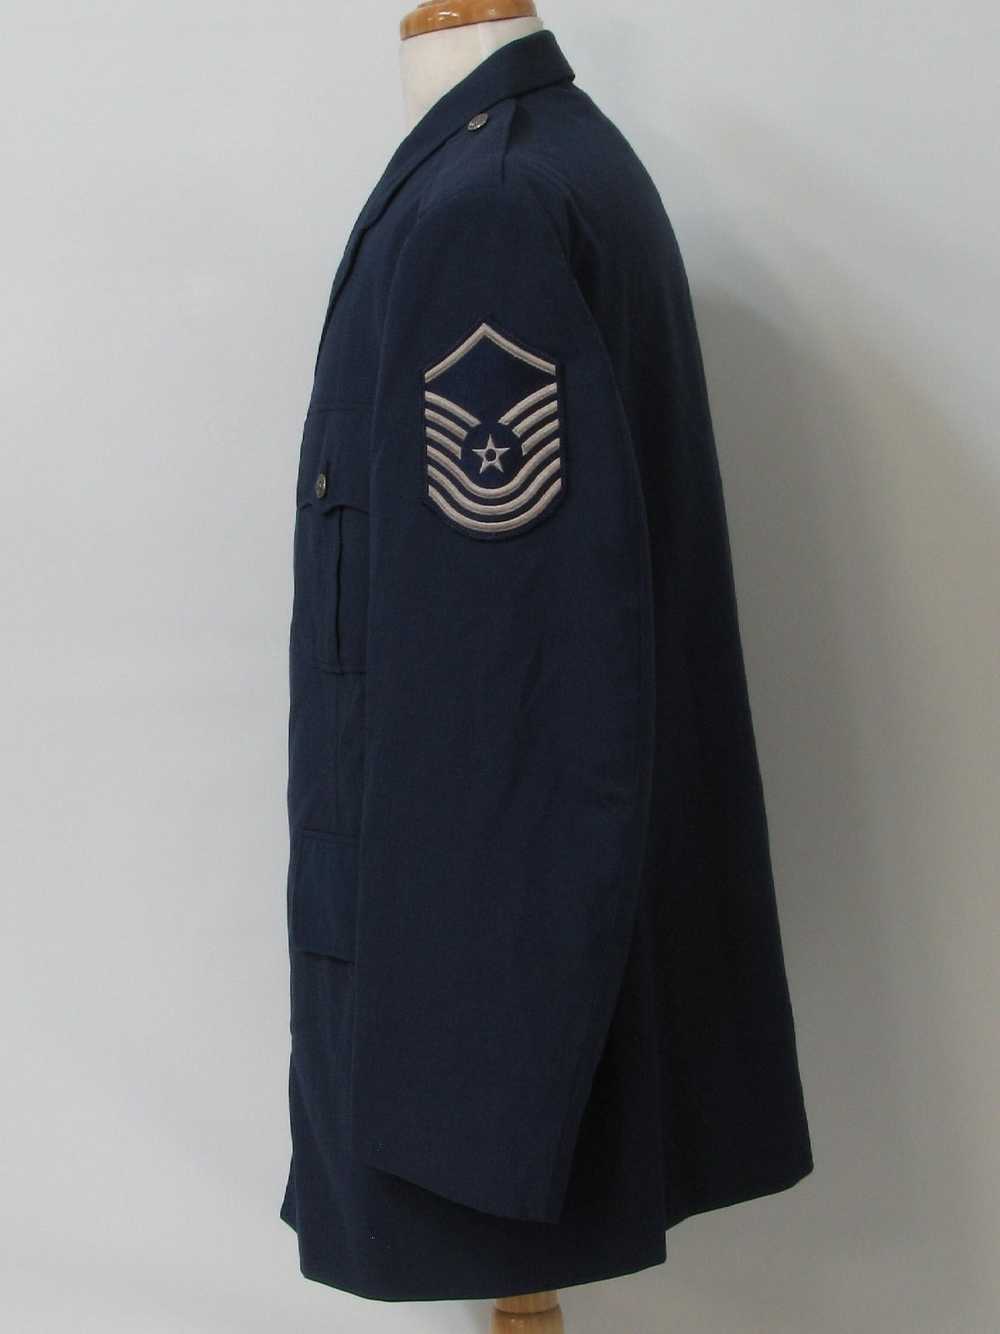 1980's Mens Military Jacket - image 3